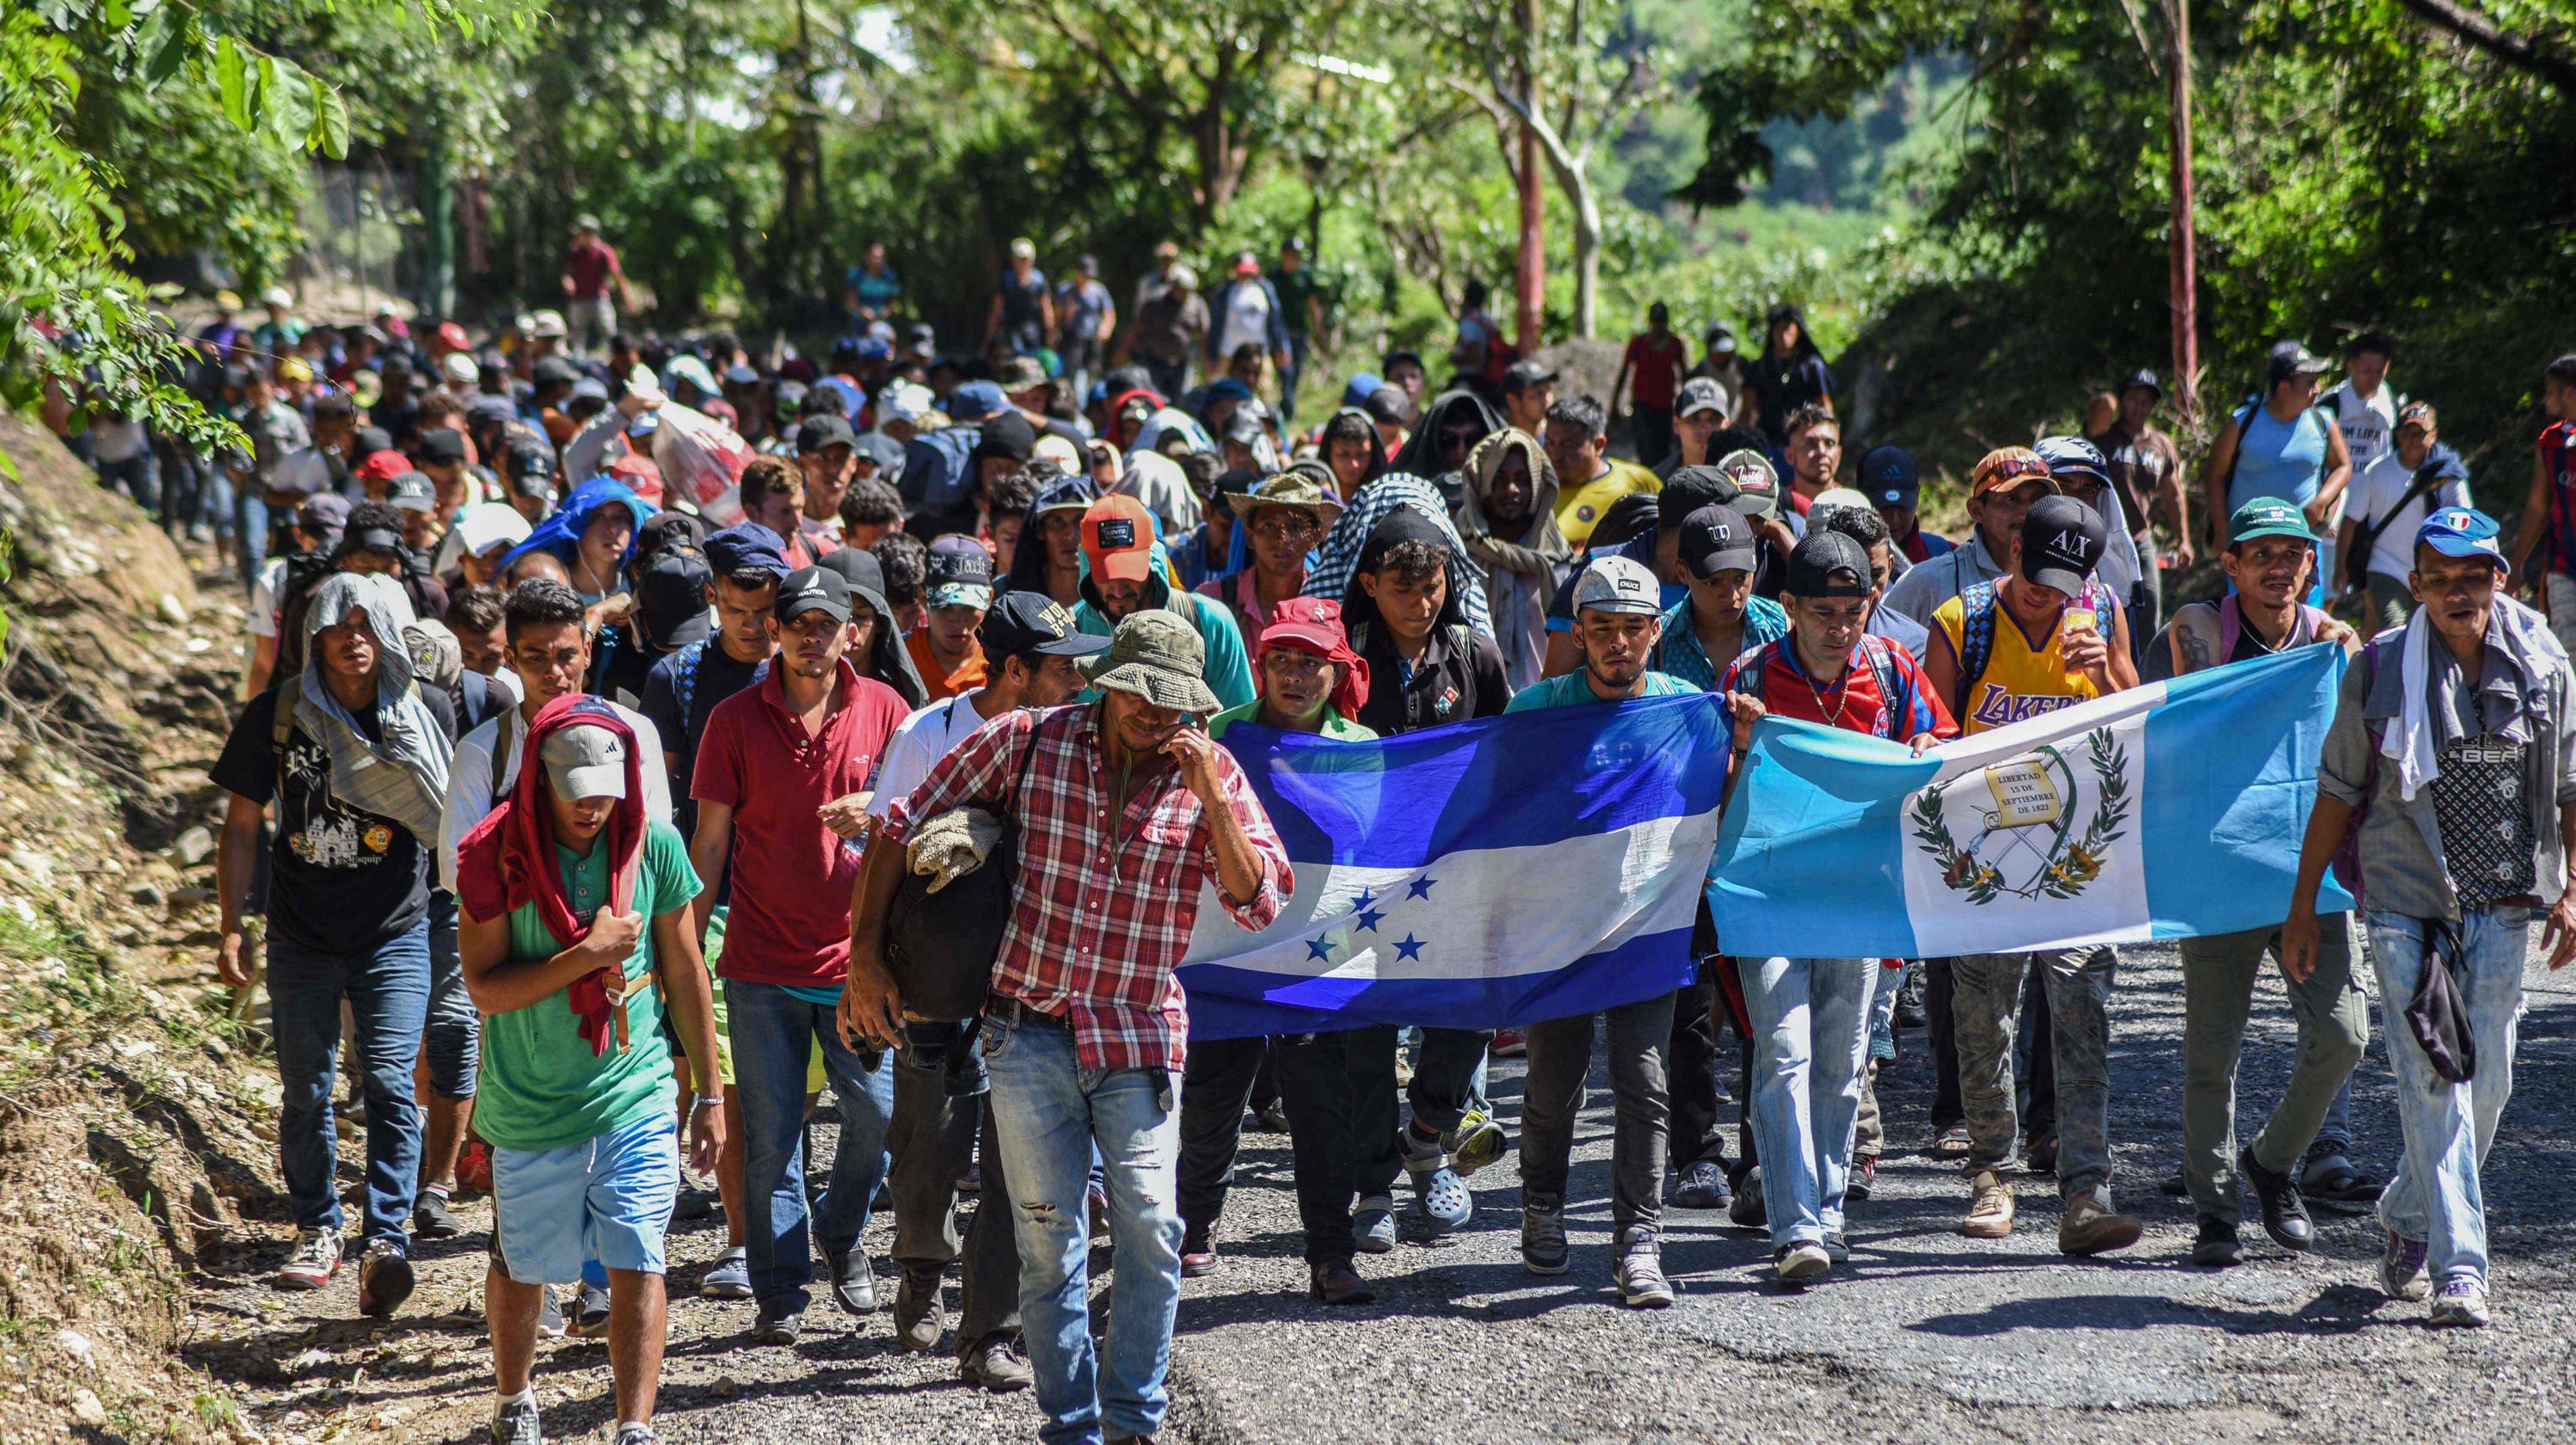 Migrant caravan TrumpCruz rally attendees express concern